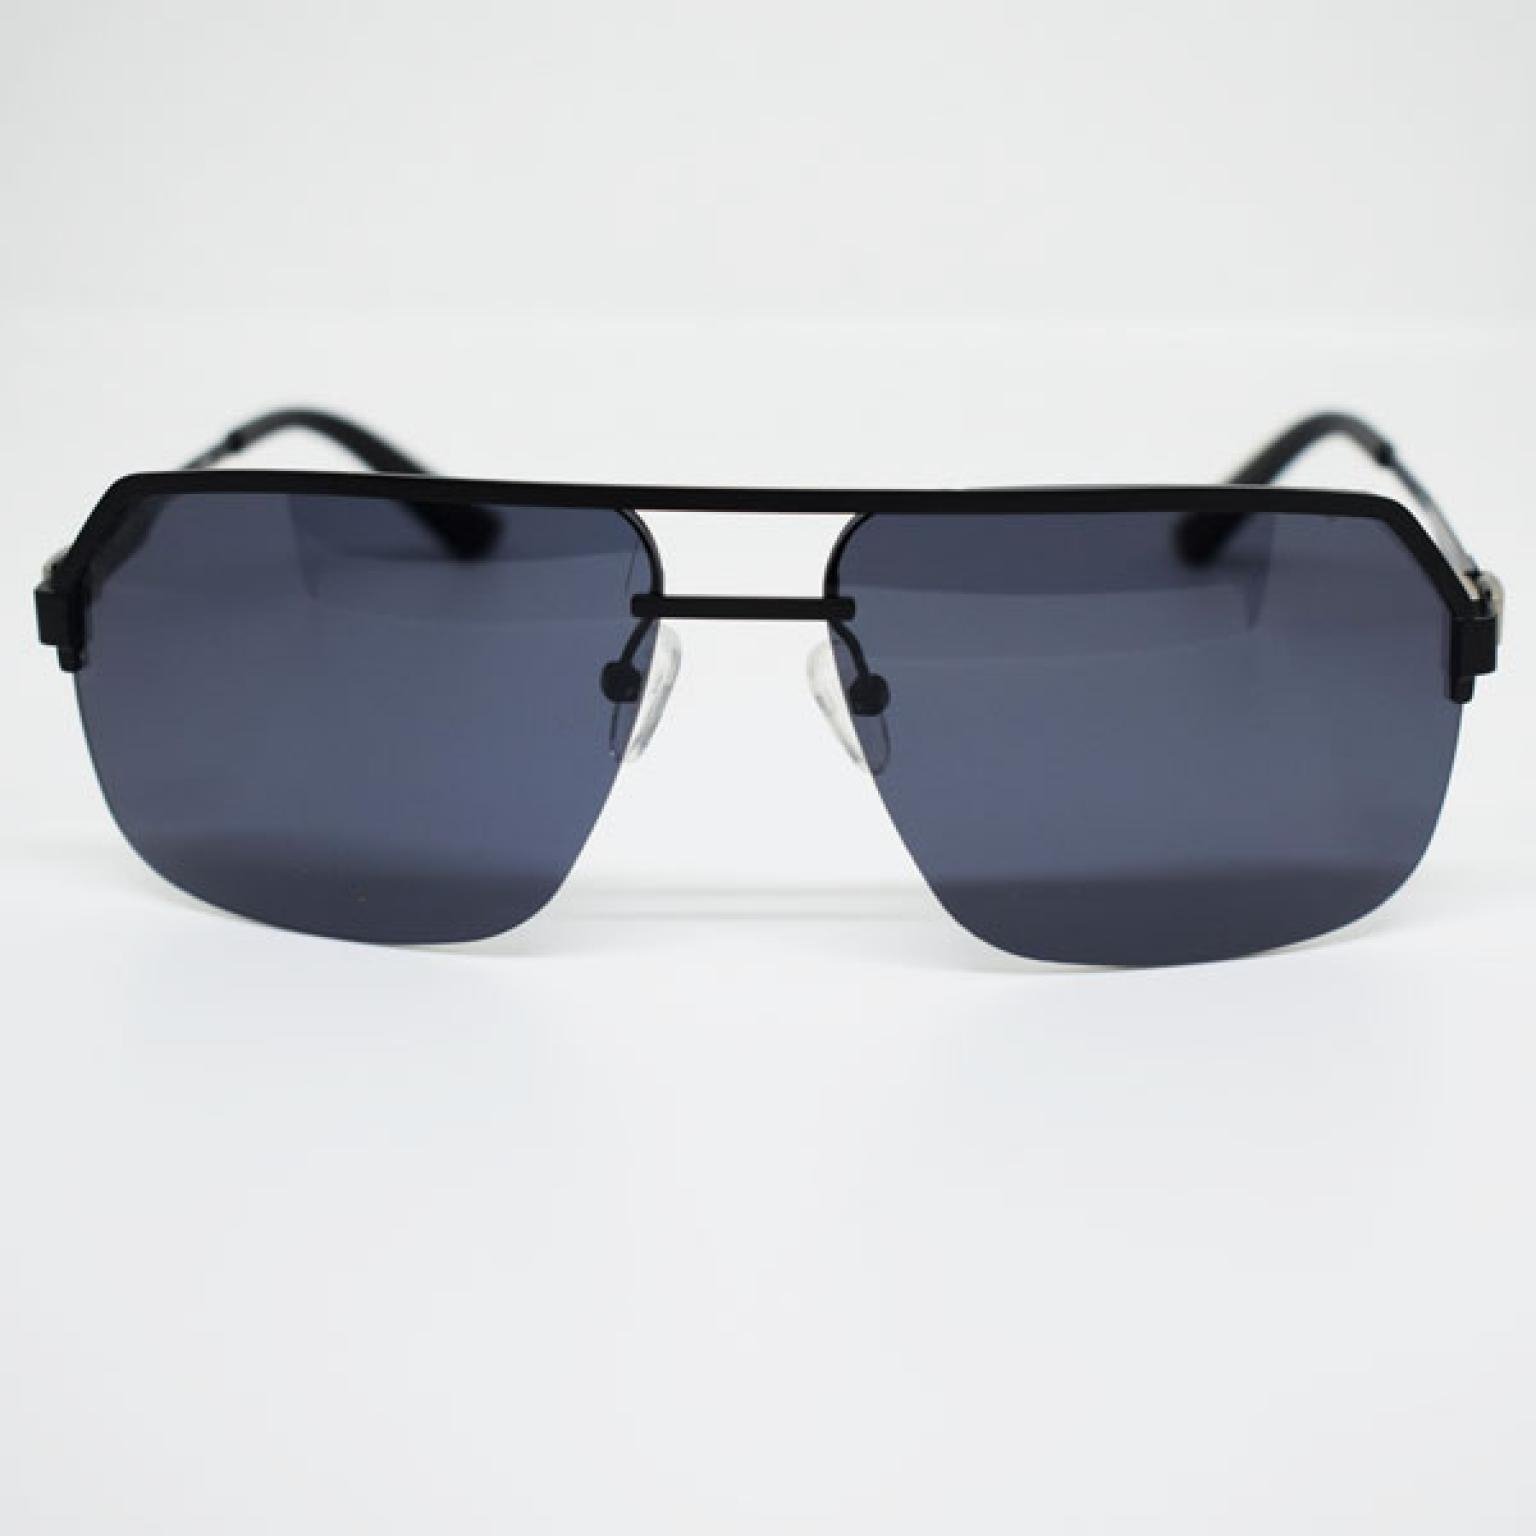 High Quality Polarized Rectangular Black Stylish Premium Sunglass For Men Women UV400 Protected |CBL-123|